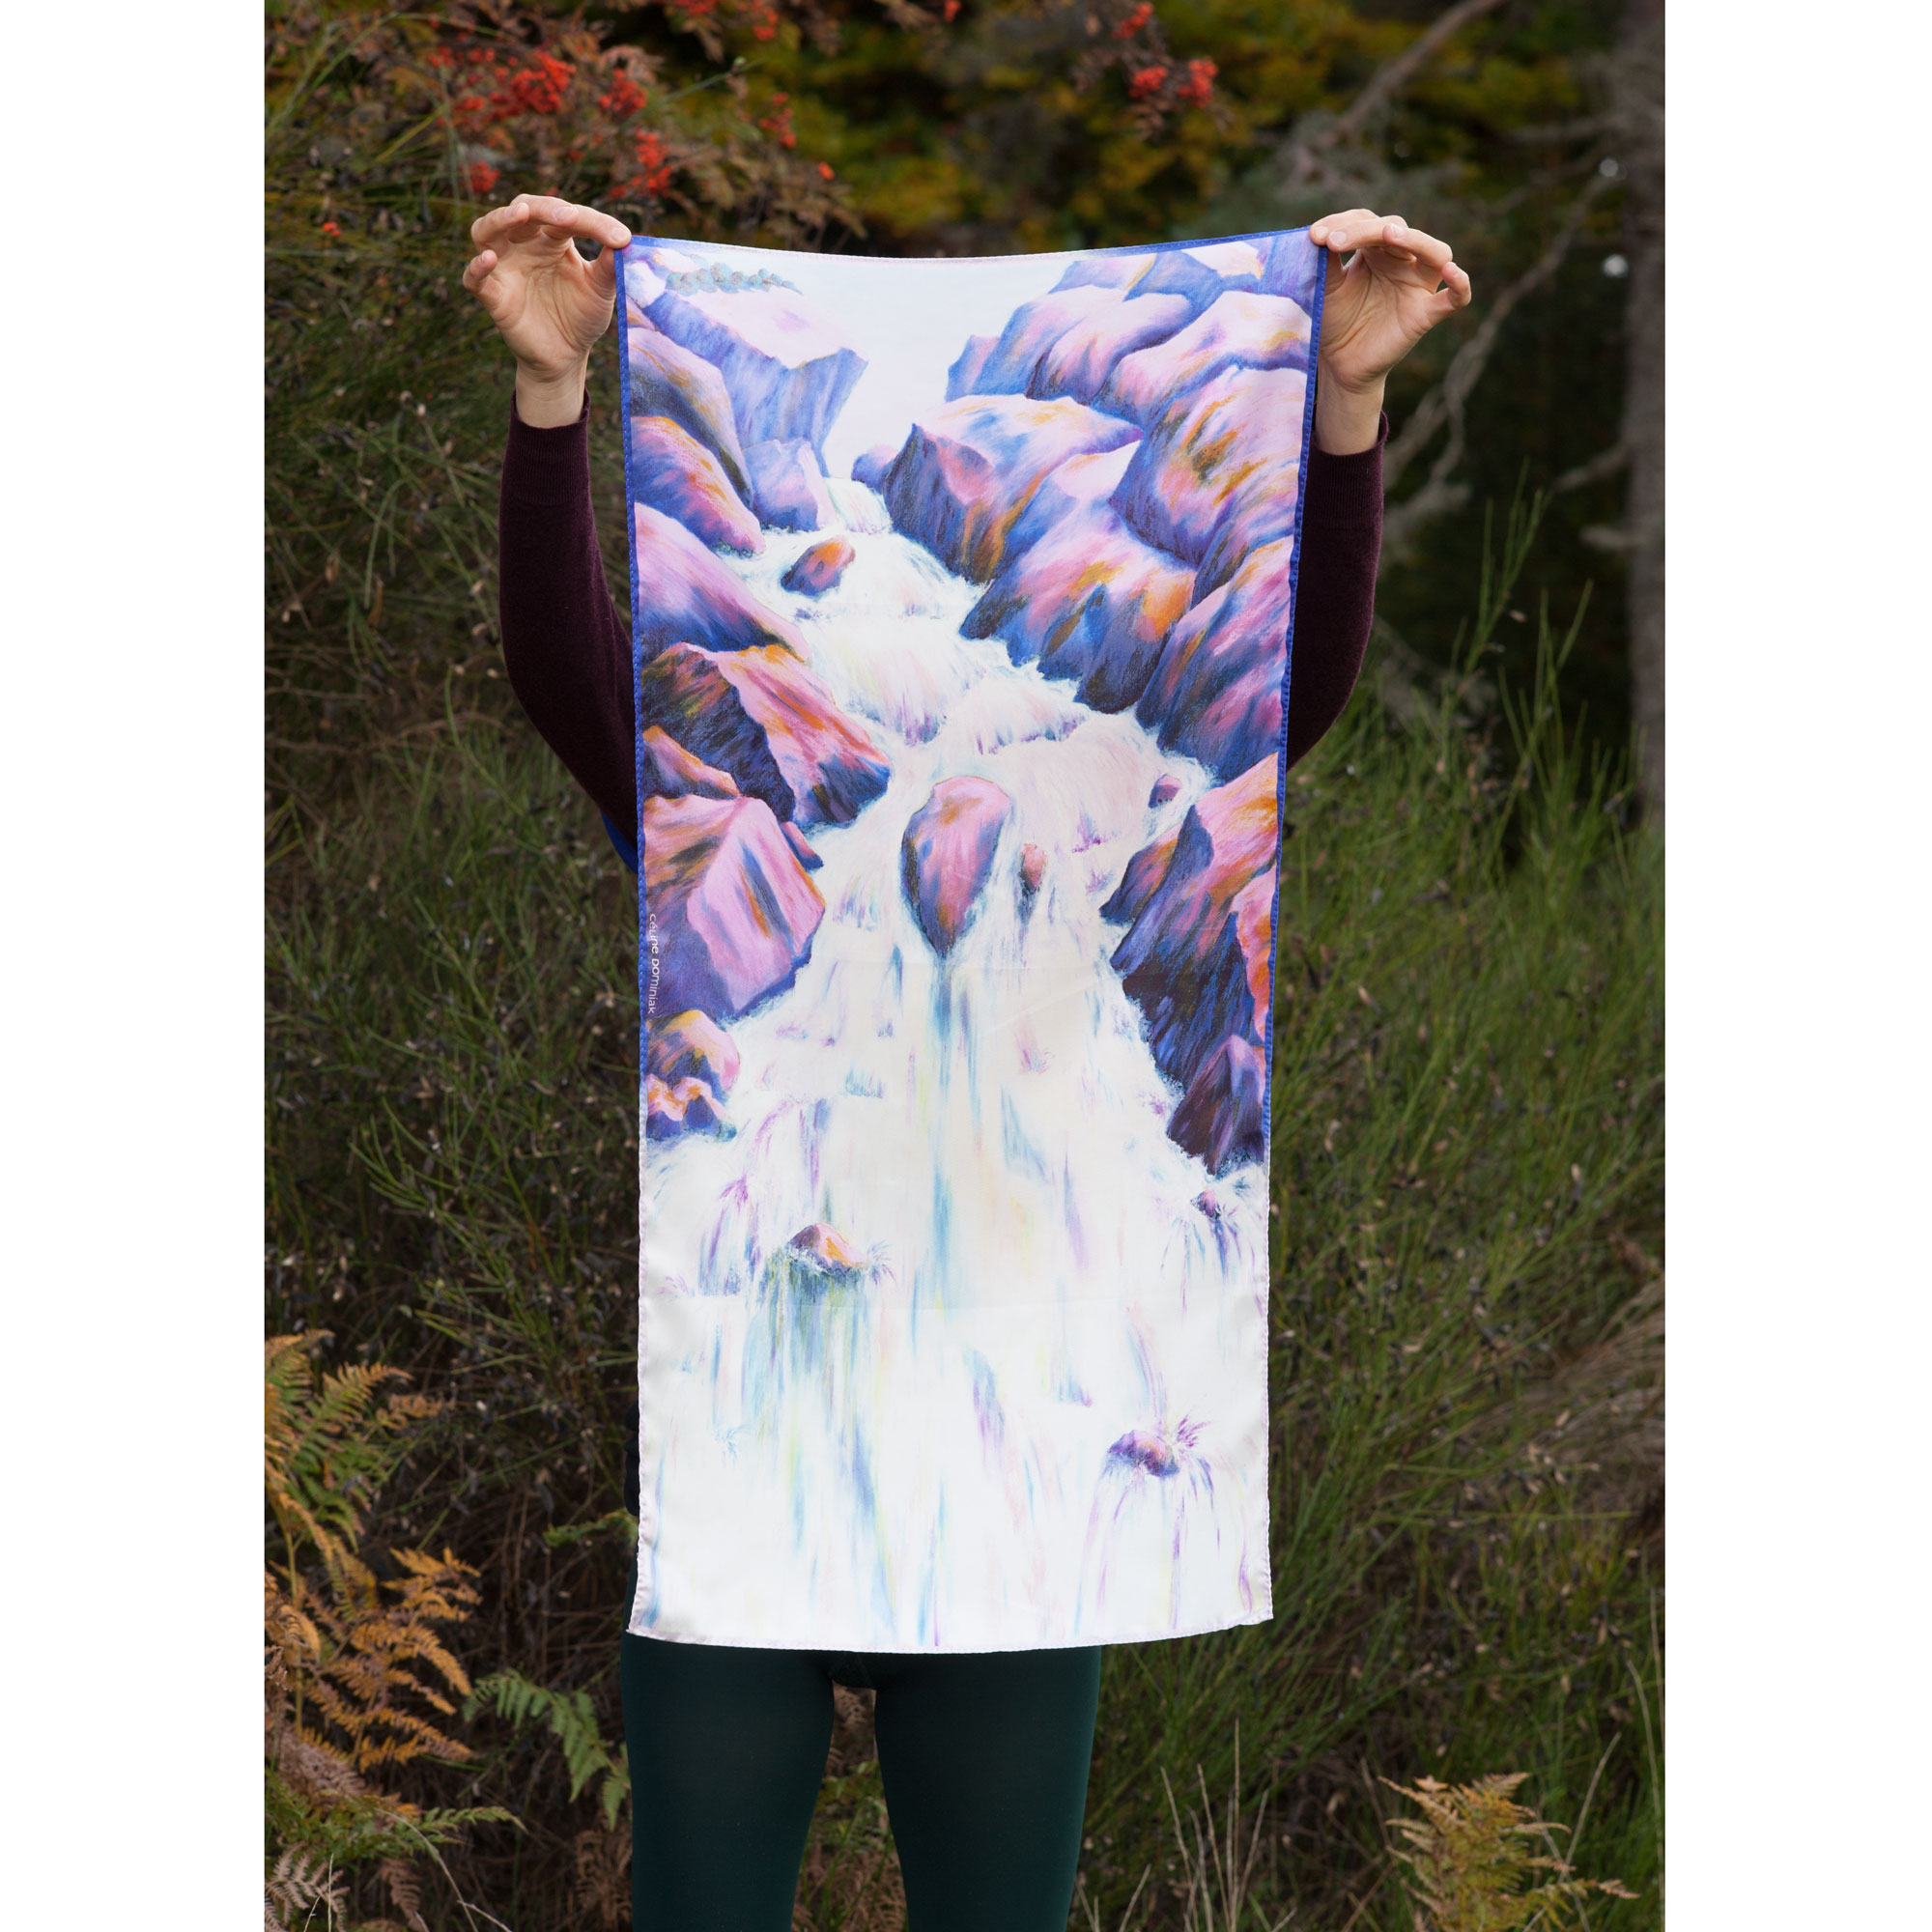 Foulard en soie motif Cascade coloris magenta tenu devant paysage automne